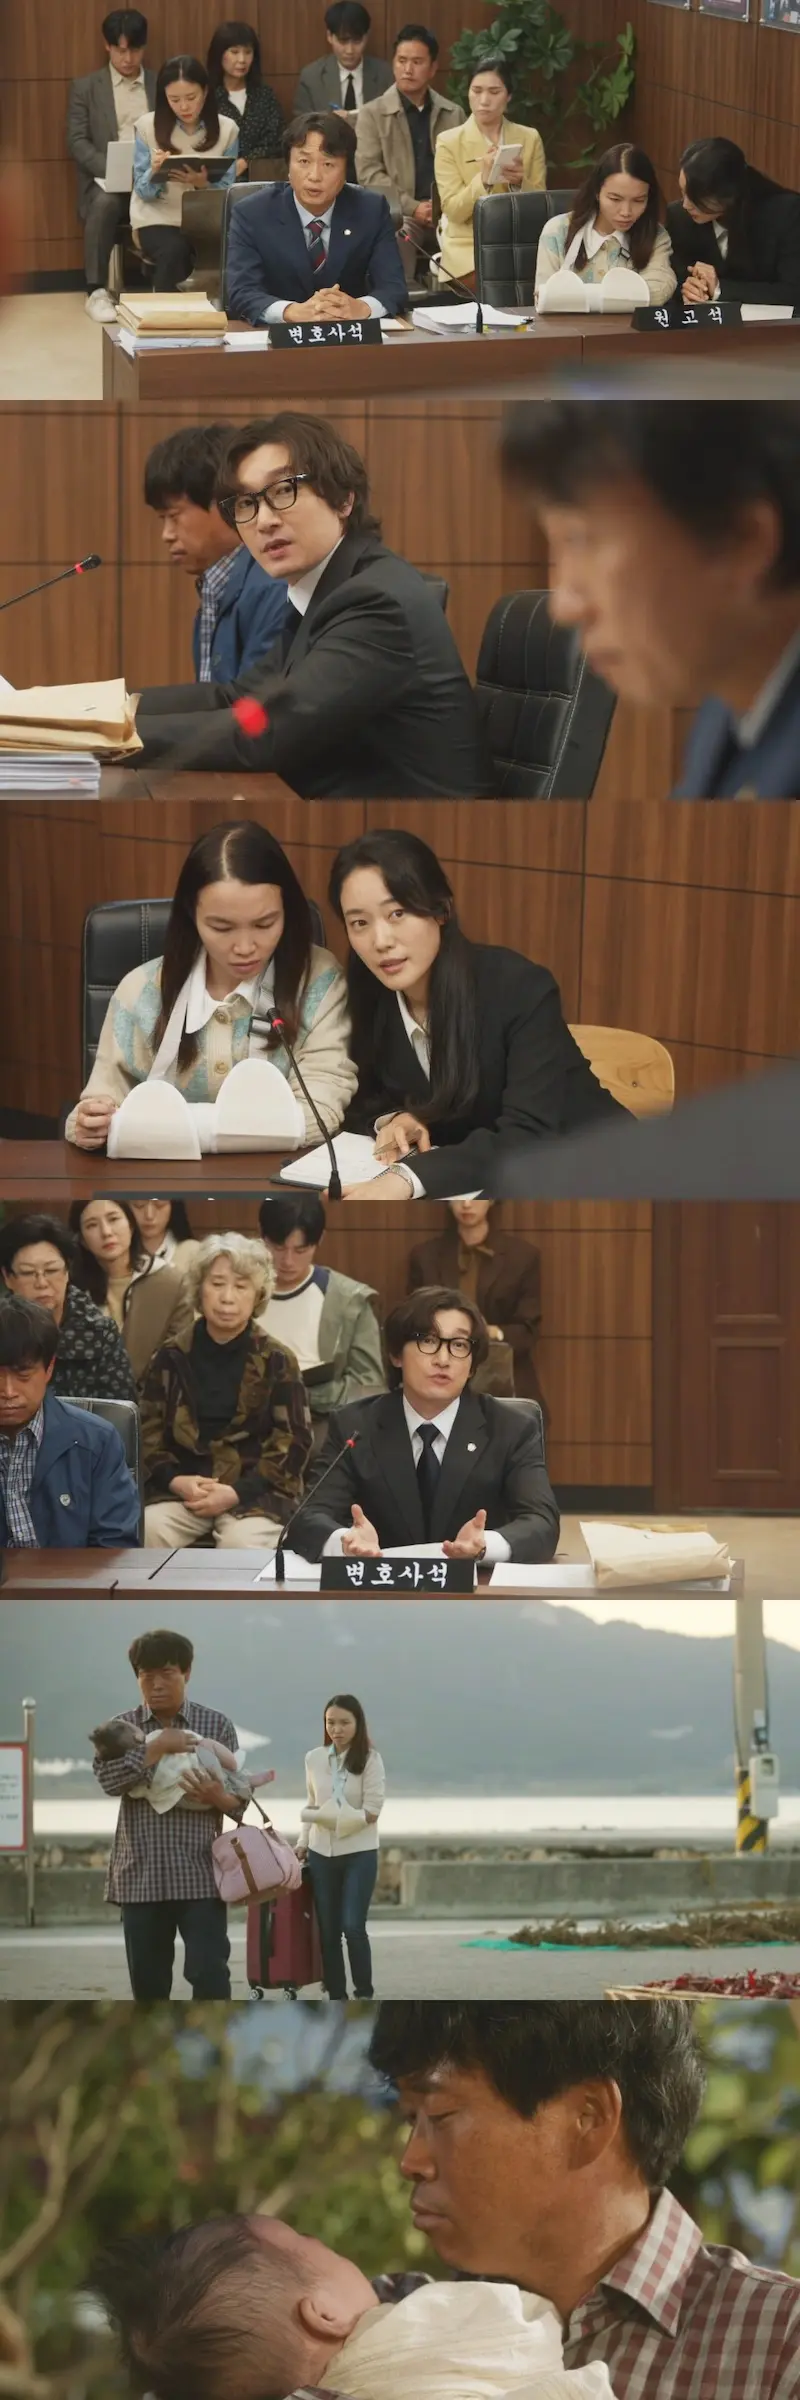 Divorce Attorney Shin Episode 9 Recap: Bold Decision - Kdrama